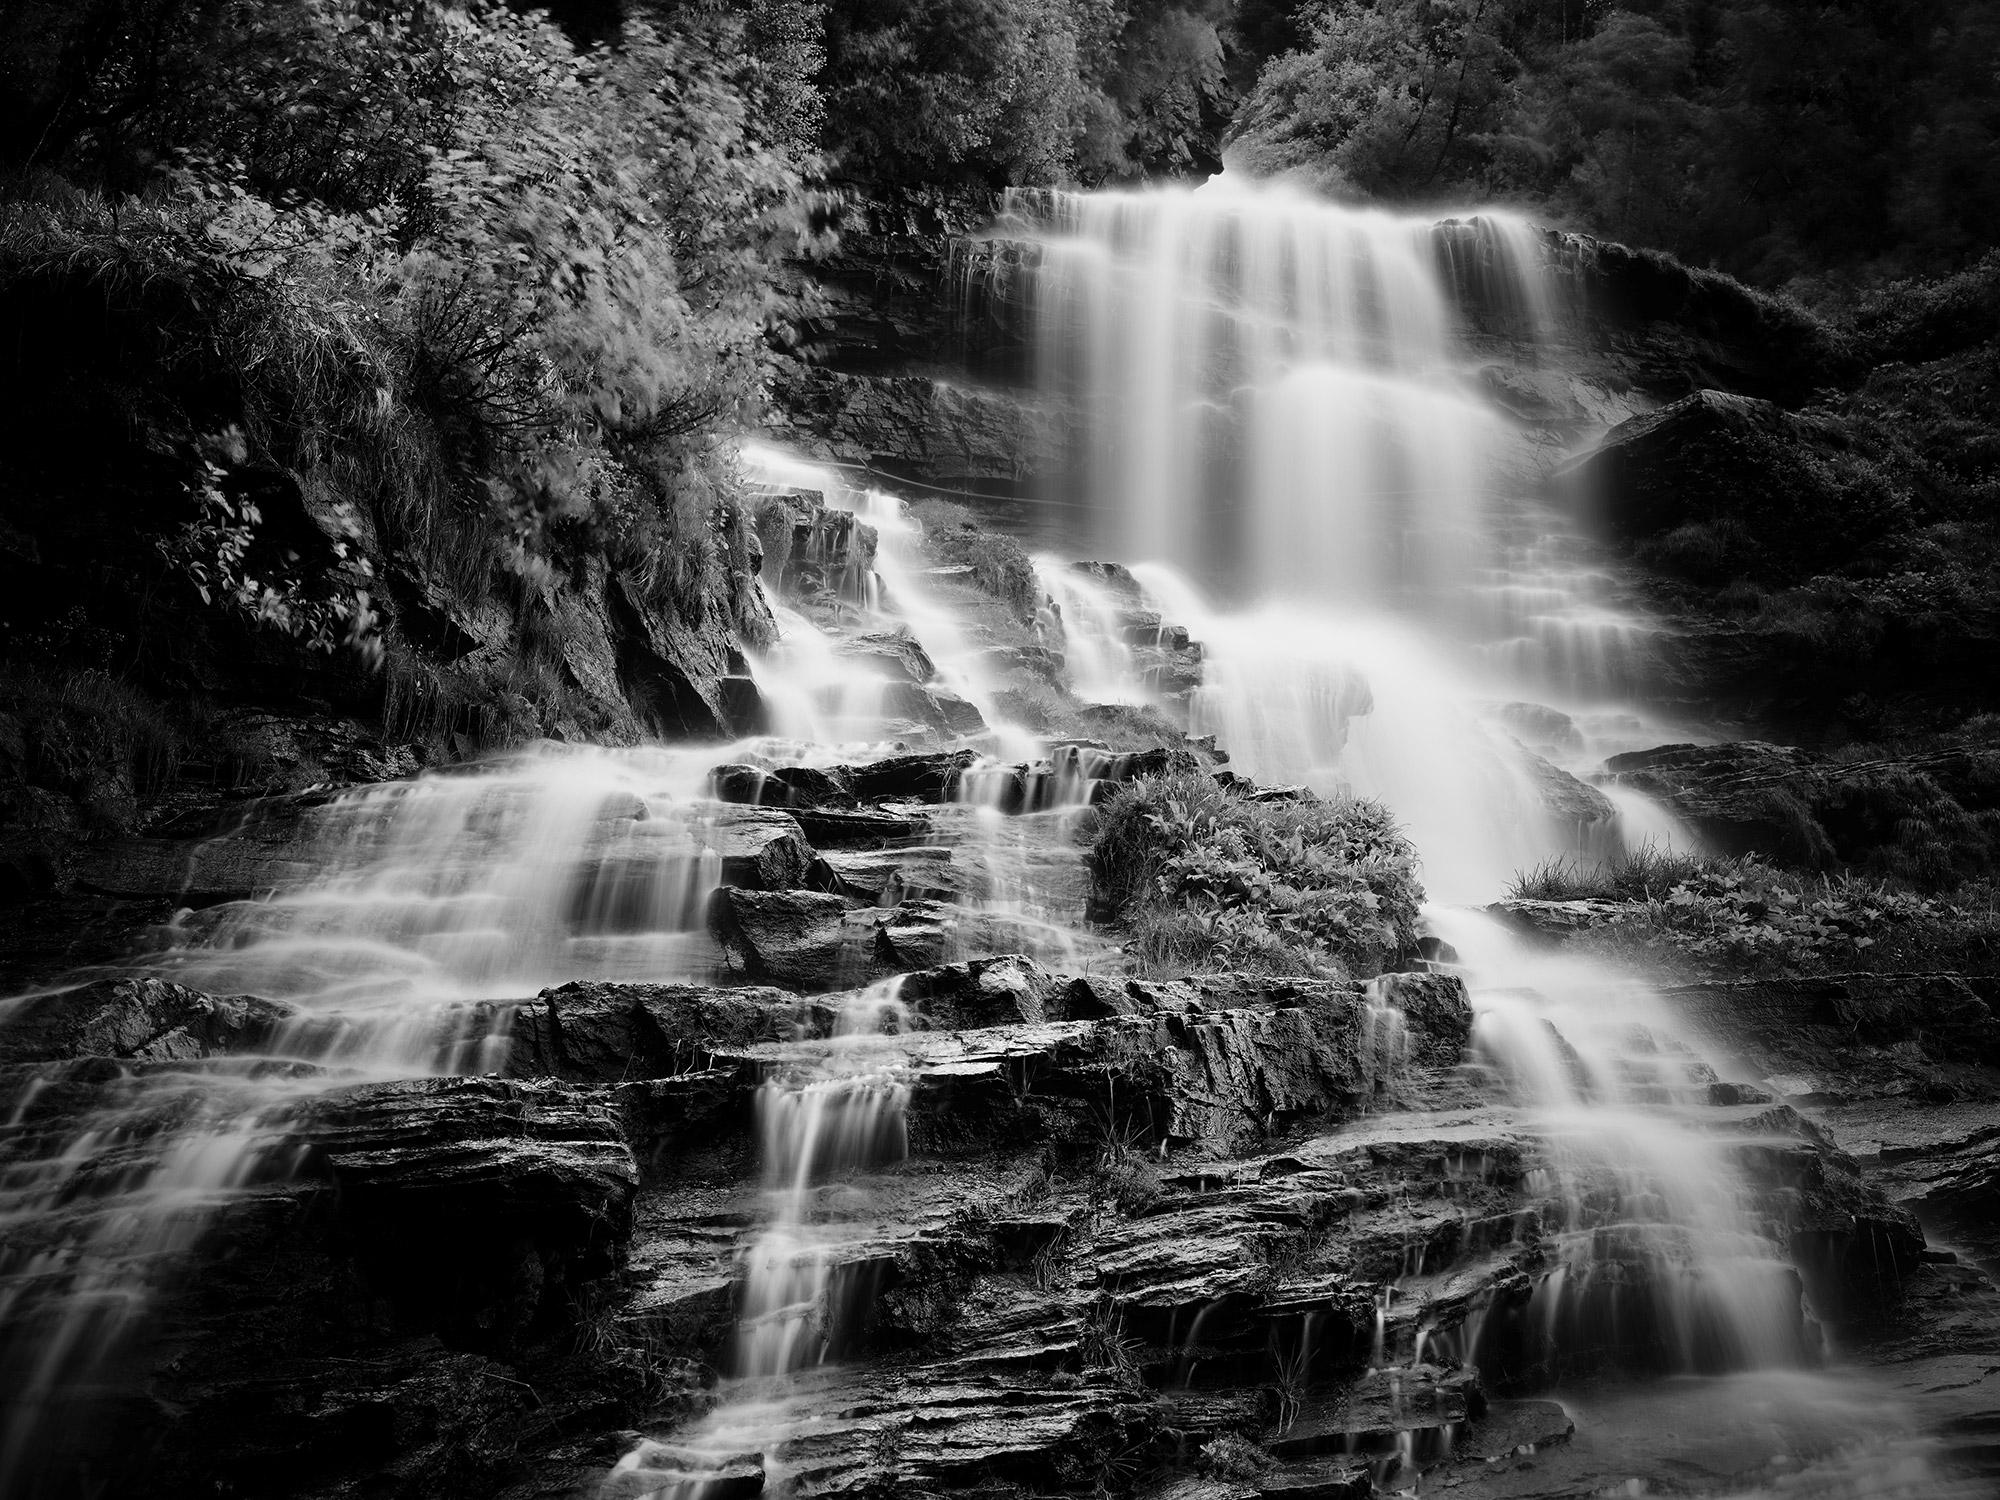 Klockelefall, Waterfall, Mountain stream, black and white photography, landscape